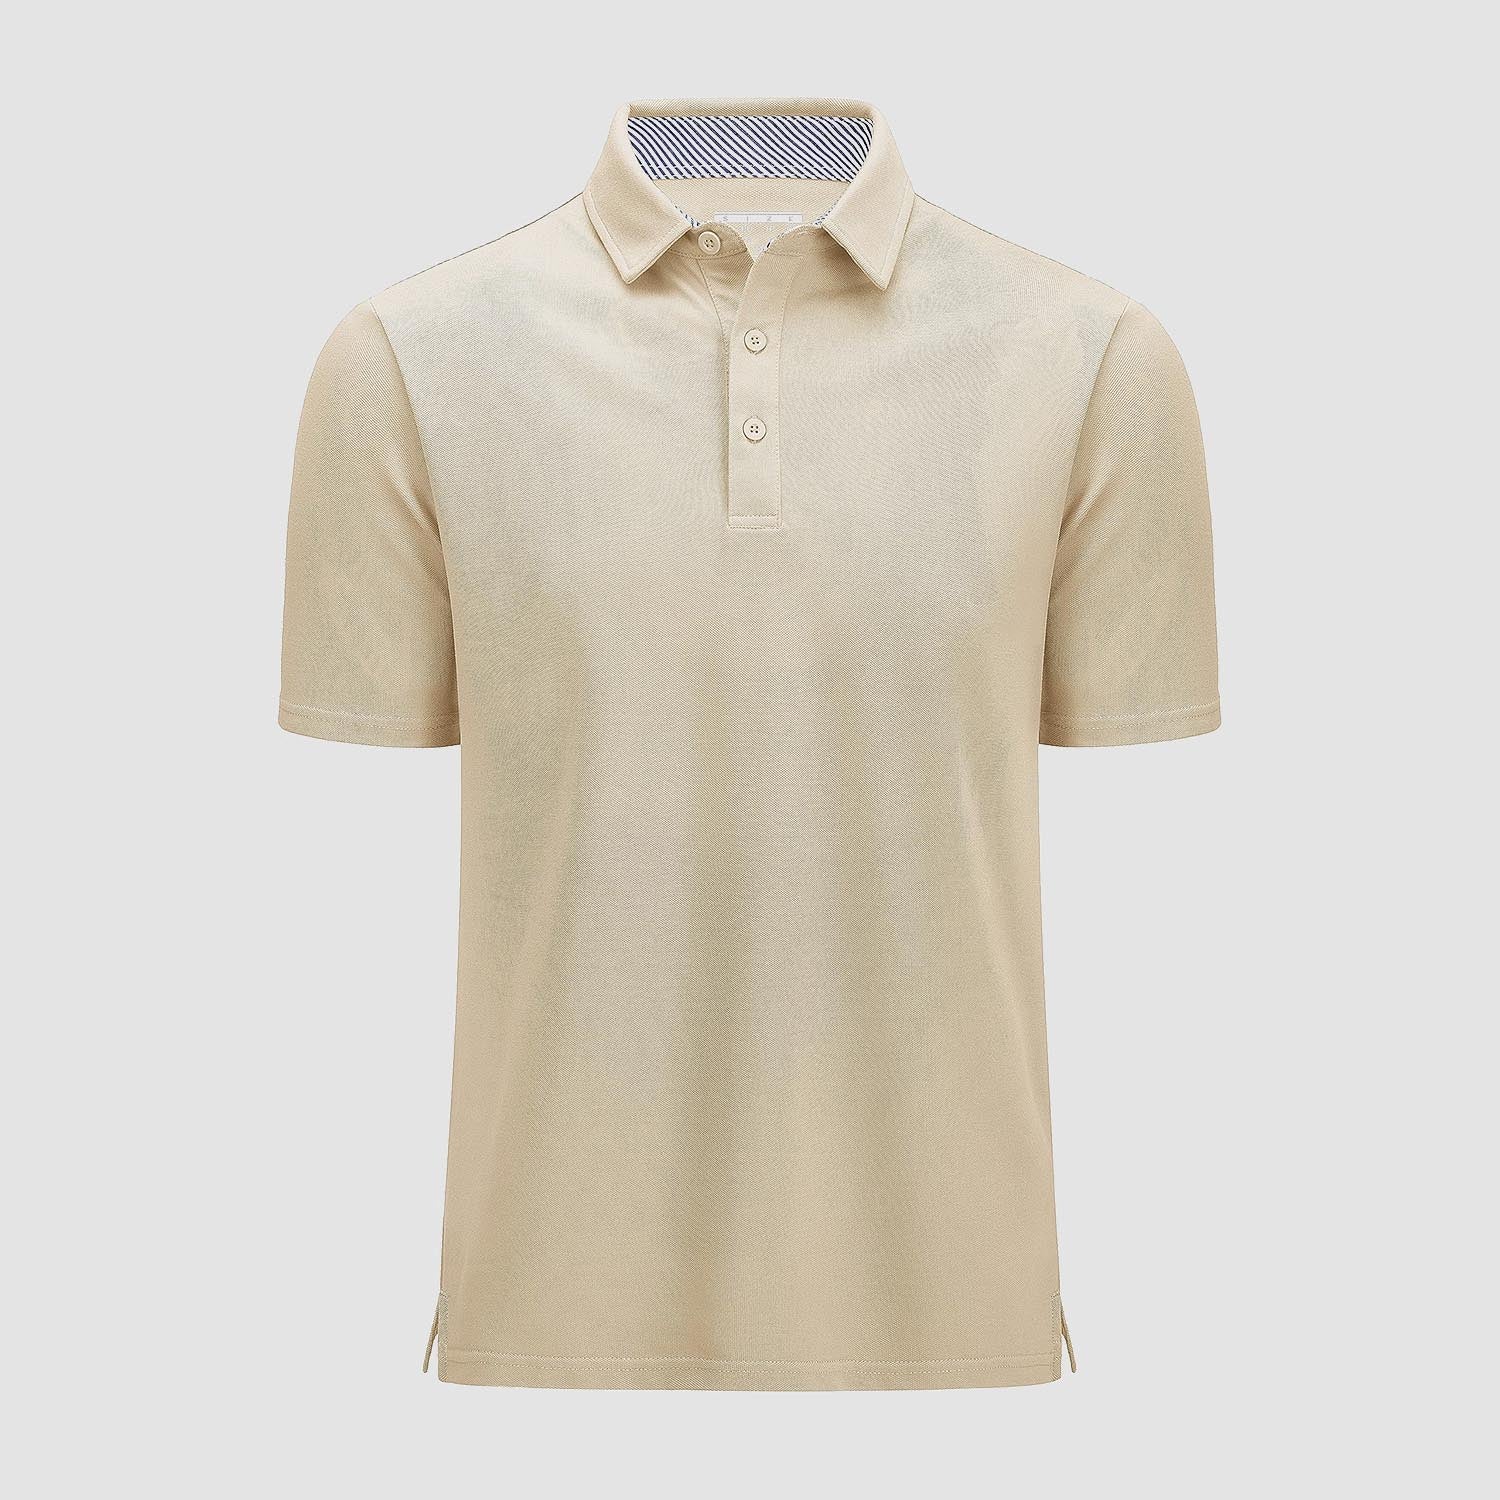 Men's Polo Shirts Short Sleeve Cotton Pique 3 Button Casual Collared T-Shirt Summer Golf Shirt